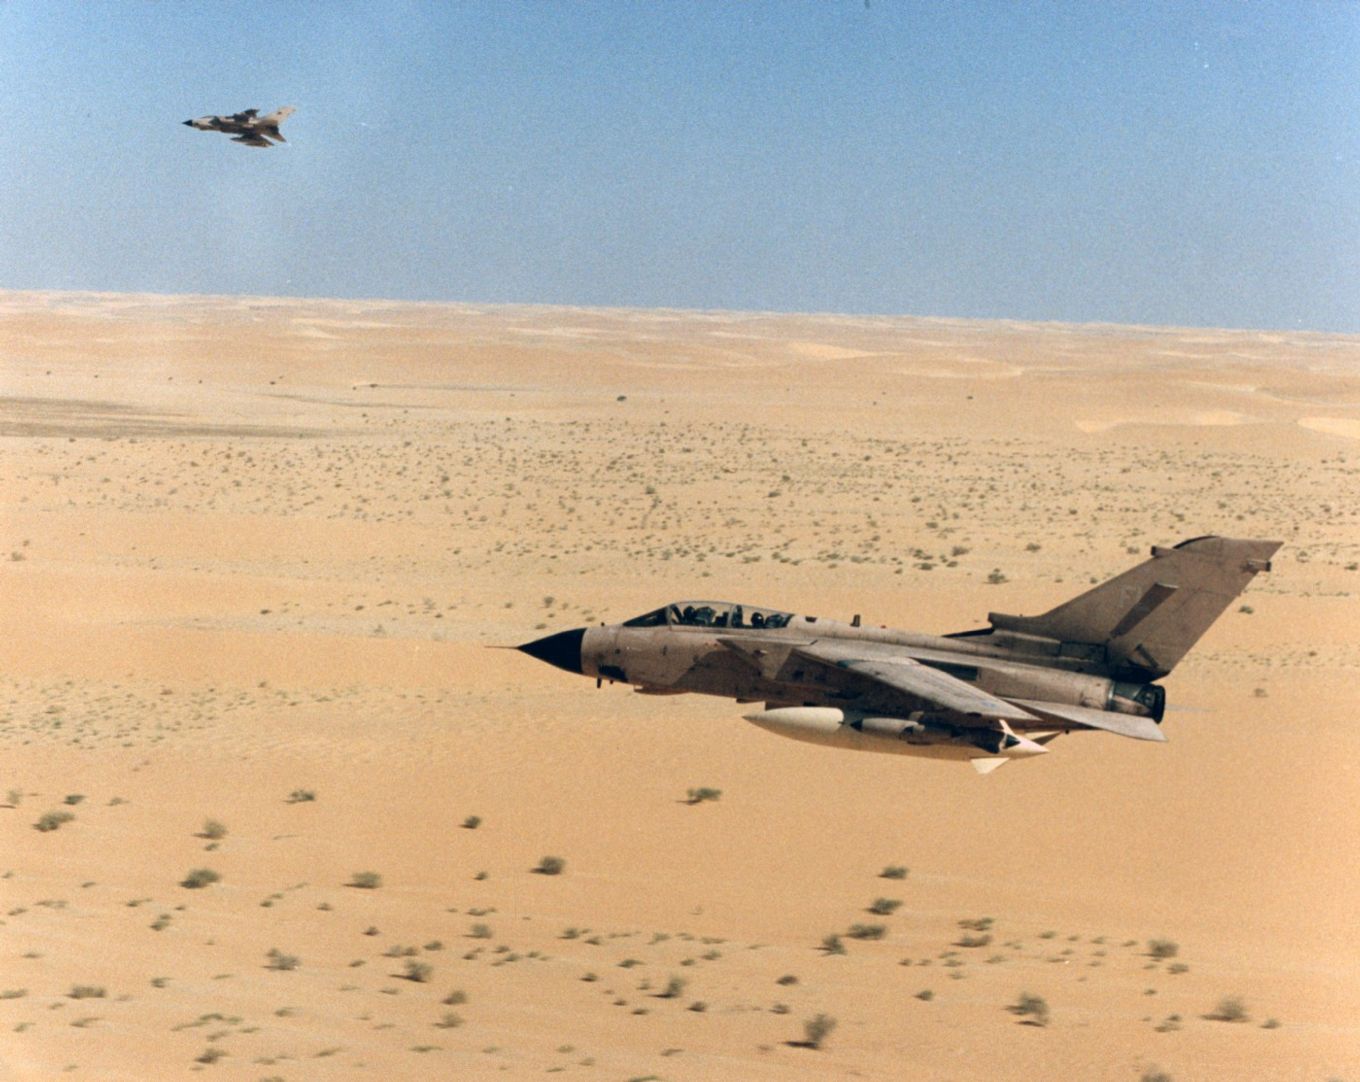 Image shows an RAF Tornado flying above a sandy desert.